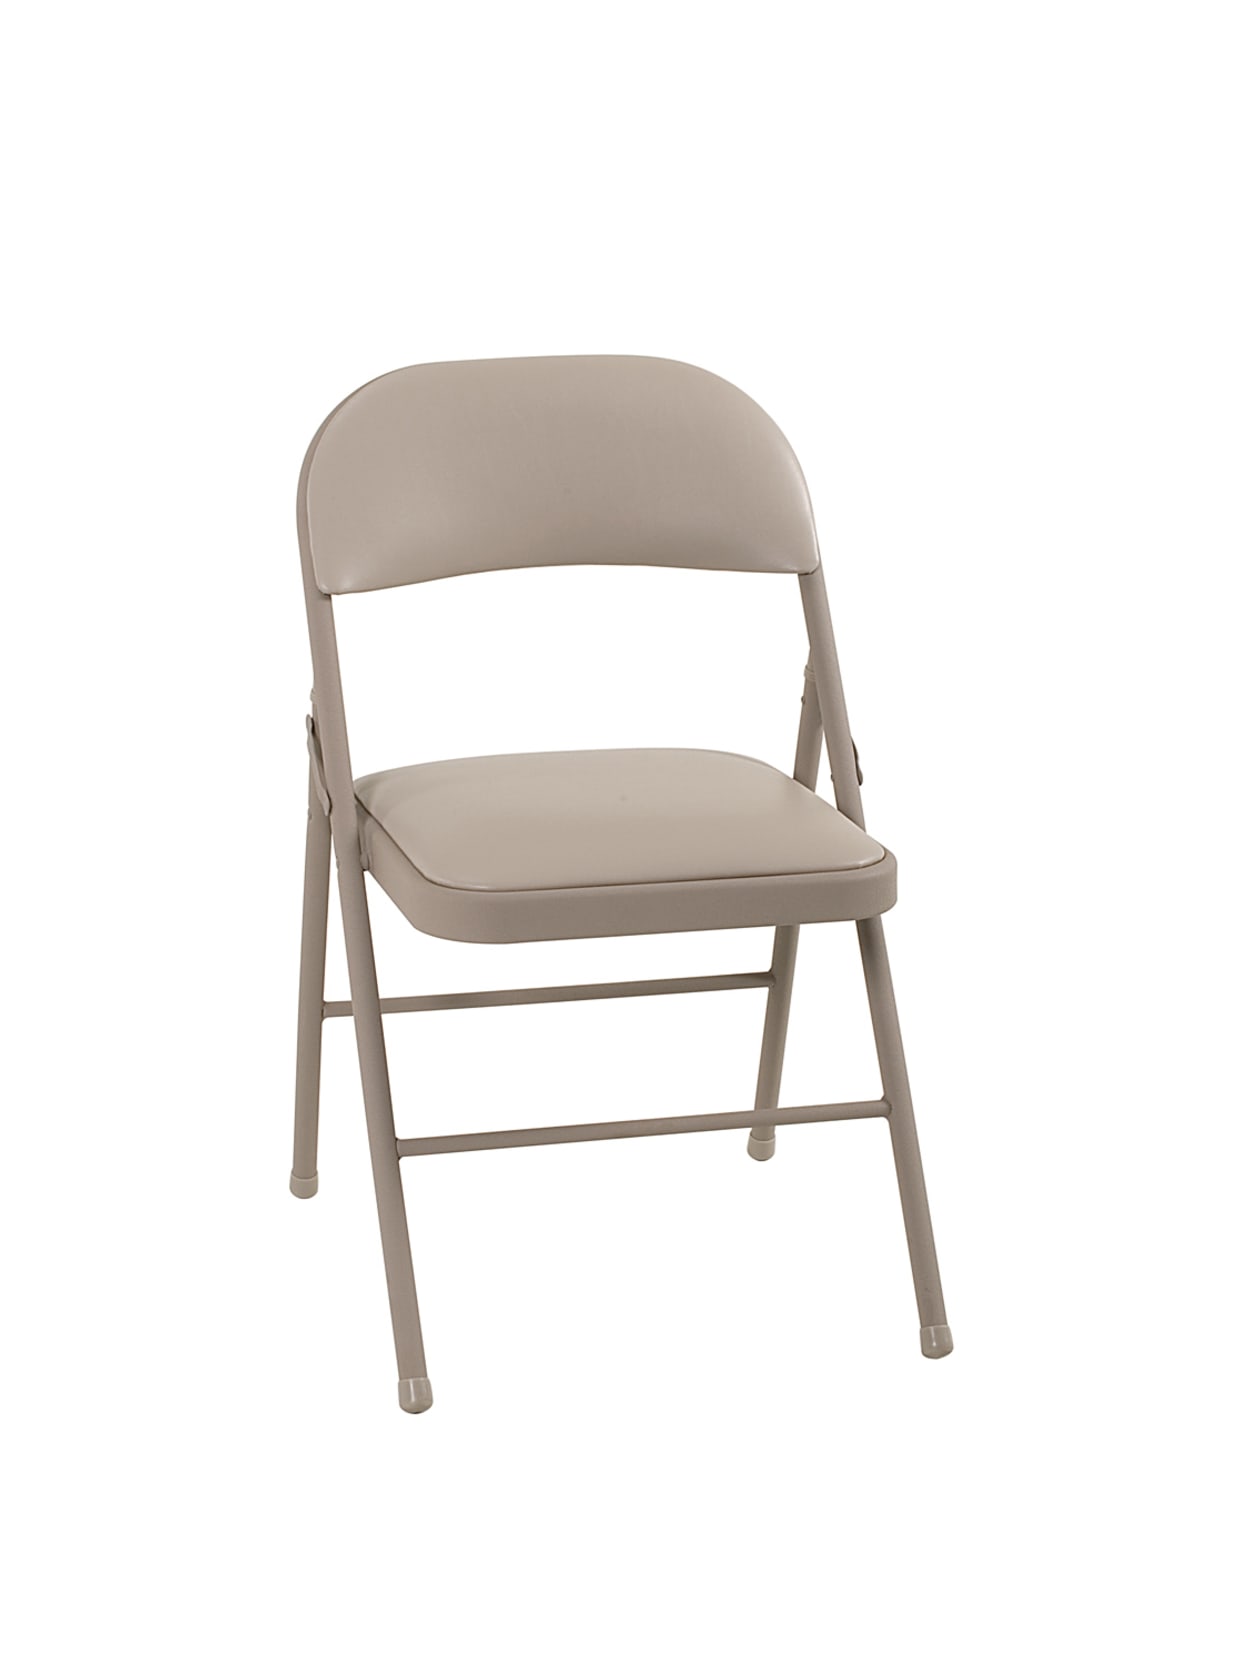 cosco vinyl folding chair antique linen gray set of 4